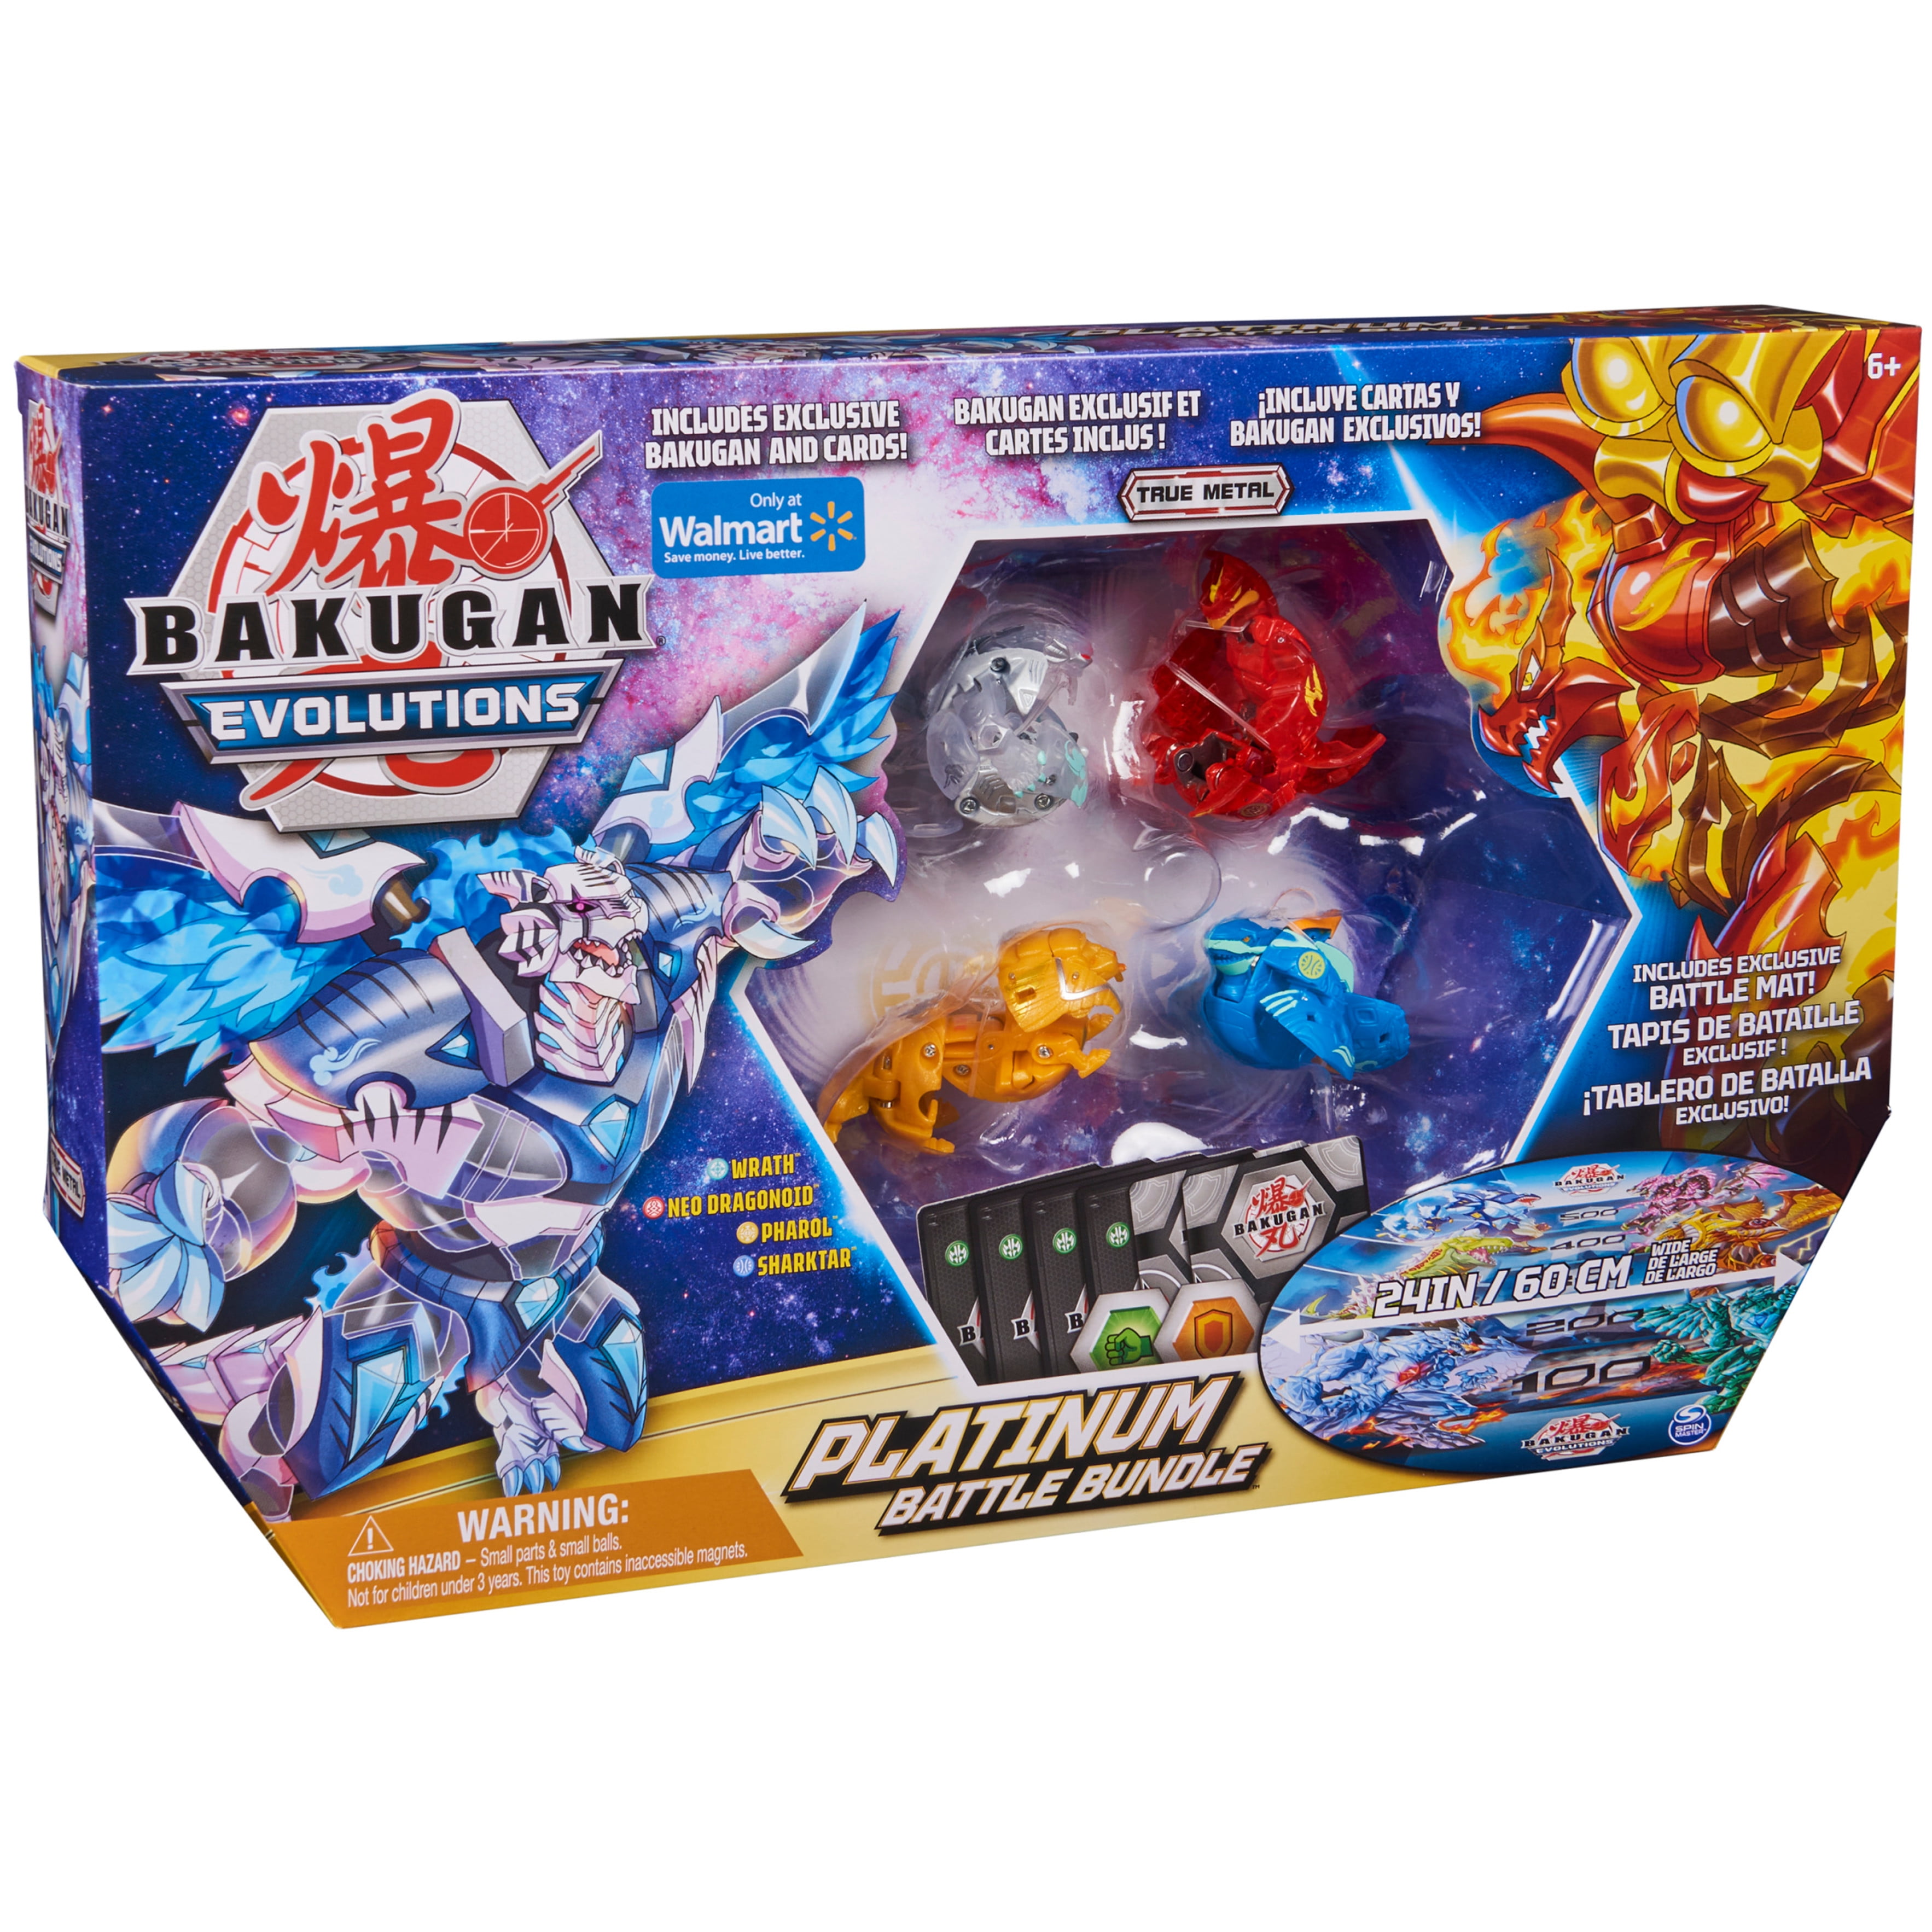 Bakugan Evolutions Platinum Battle Bundle (Walmart Exclusive)